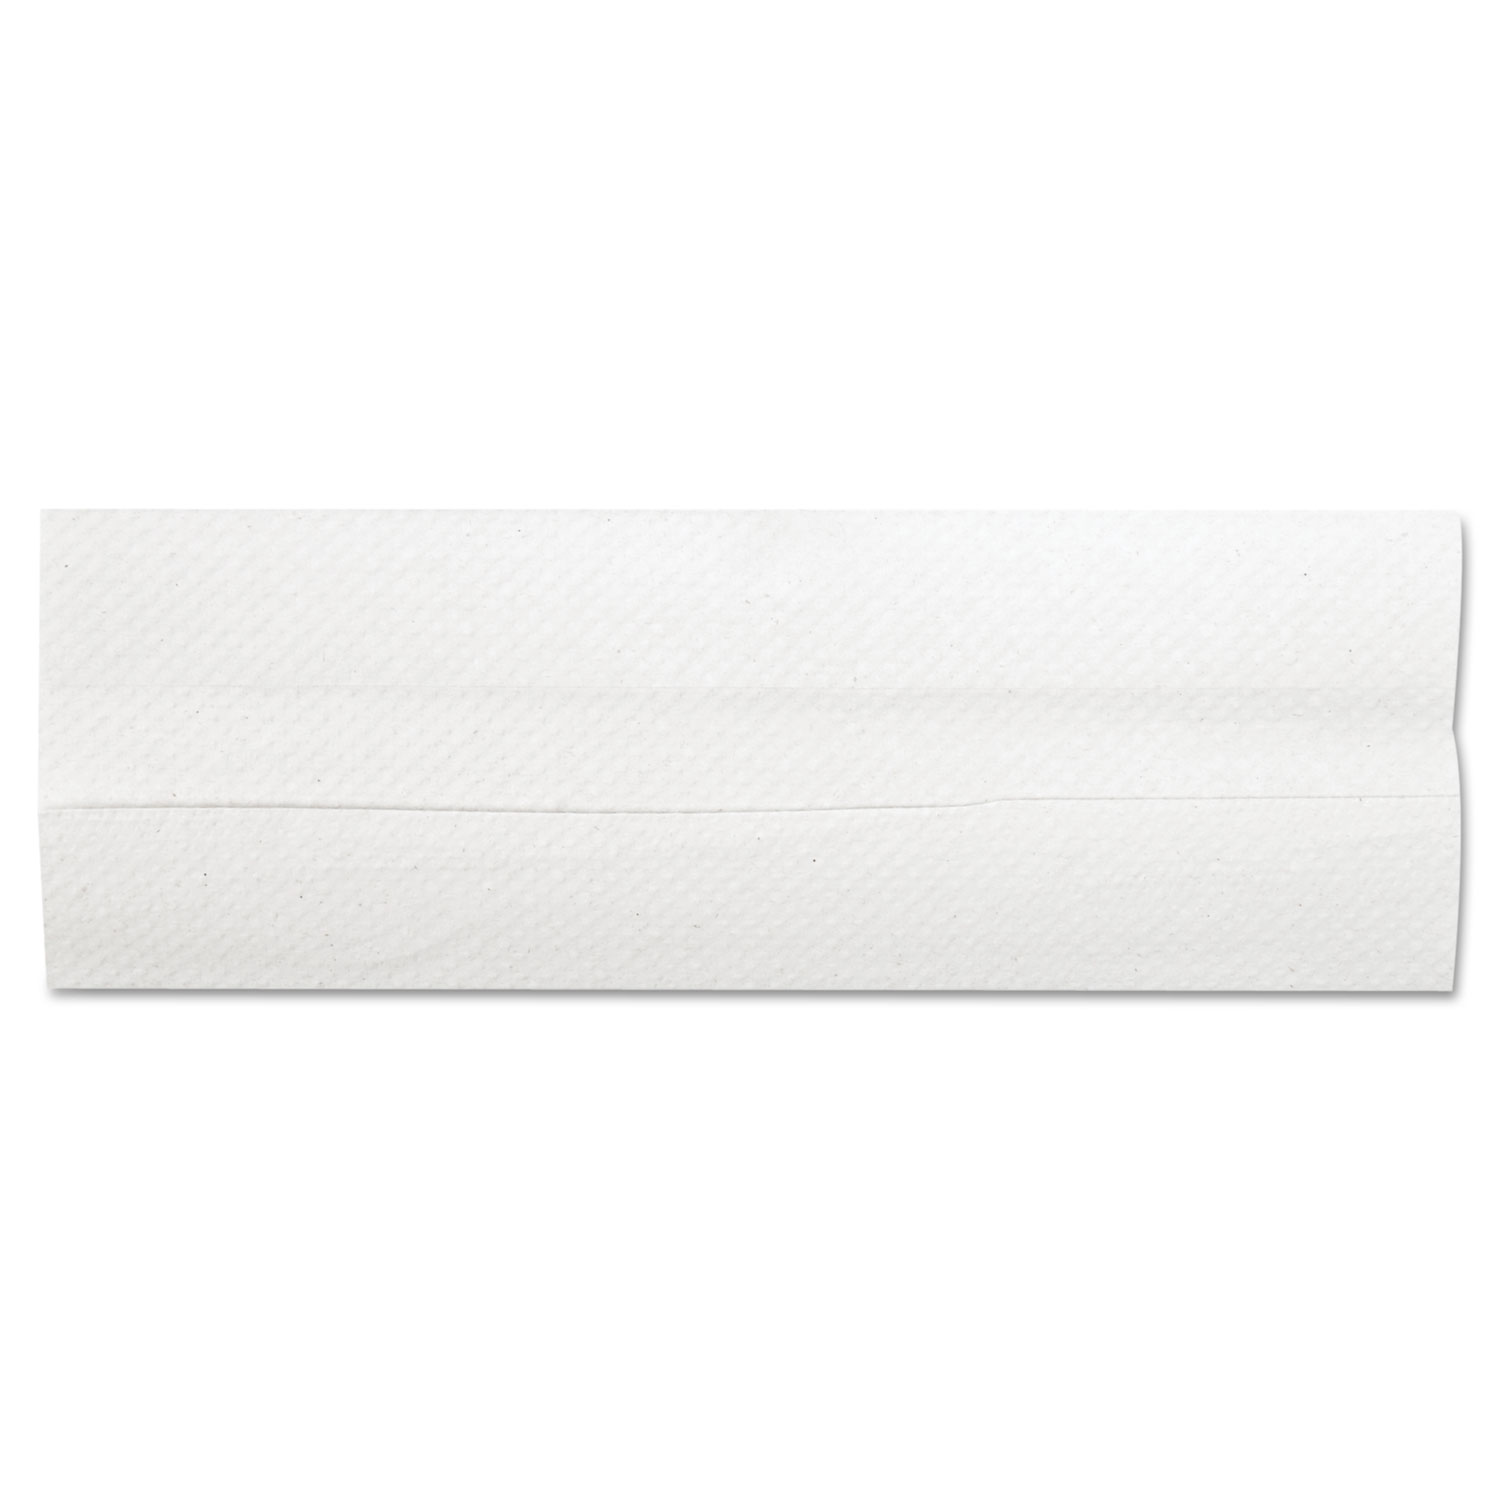  General Supply 8115 C-Fold Towels, 10.13 x 11, White, 200/Pack, 12 Packs/Carton (GEN1510B) 